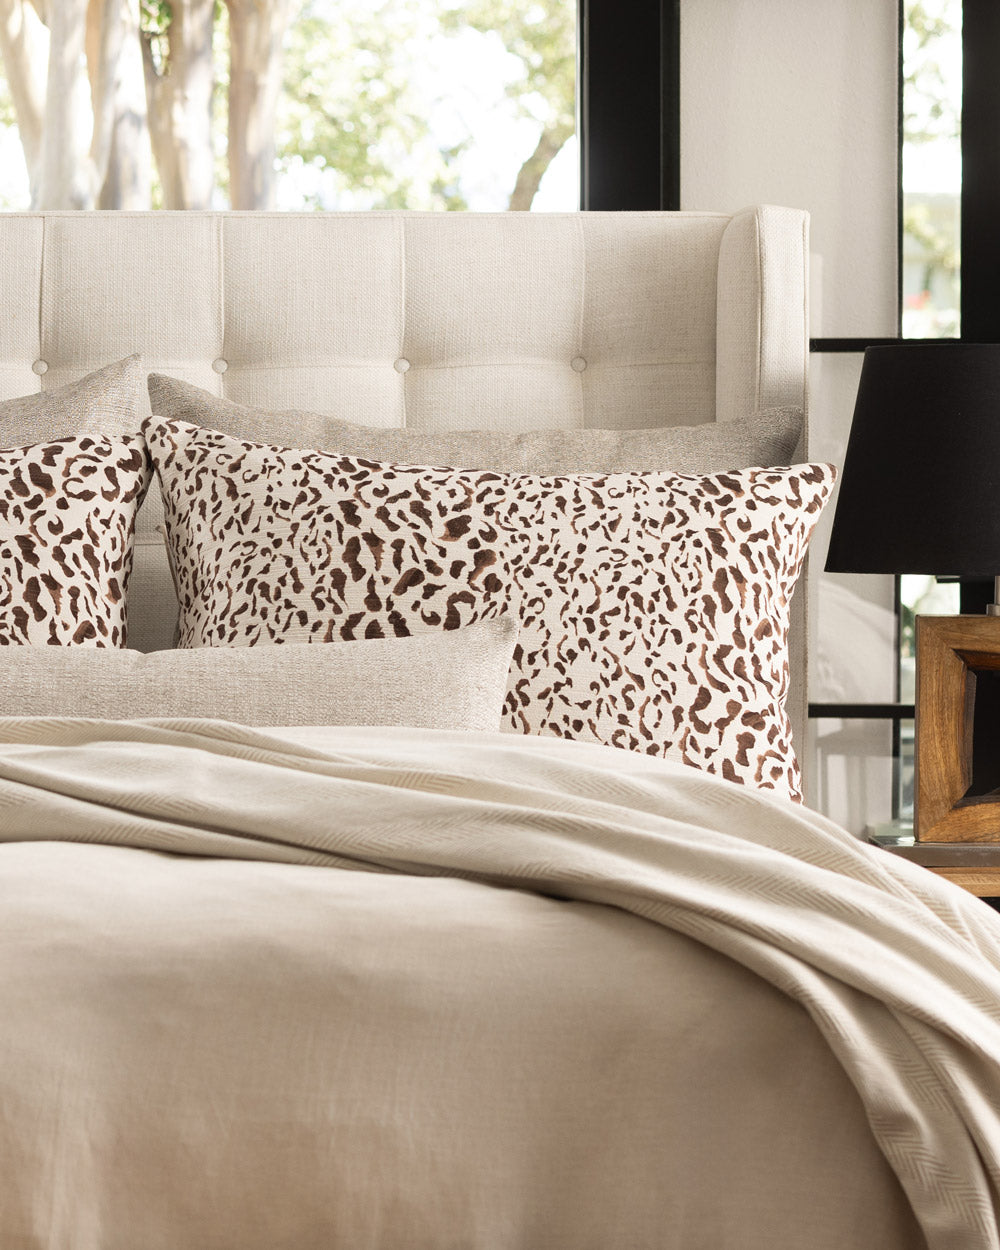 Lili Alessandra: Luxury Bedding, Pillows & Bedroom Accessories